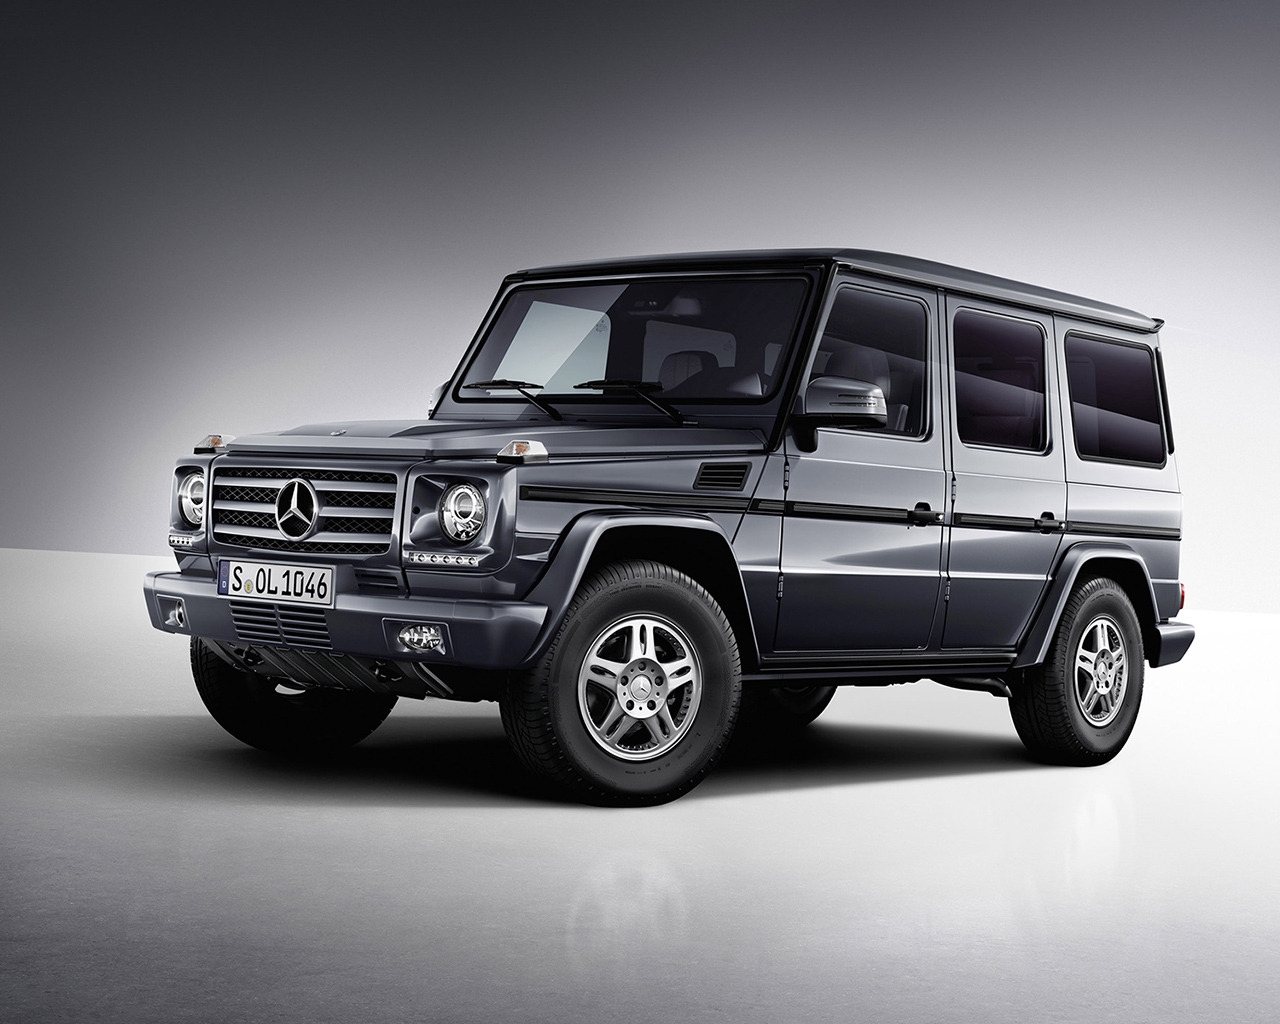 Mercedes Benz G Class Studio 2013 for 1280 x 1024 resolution